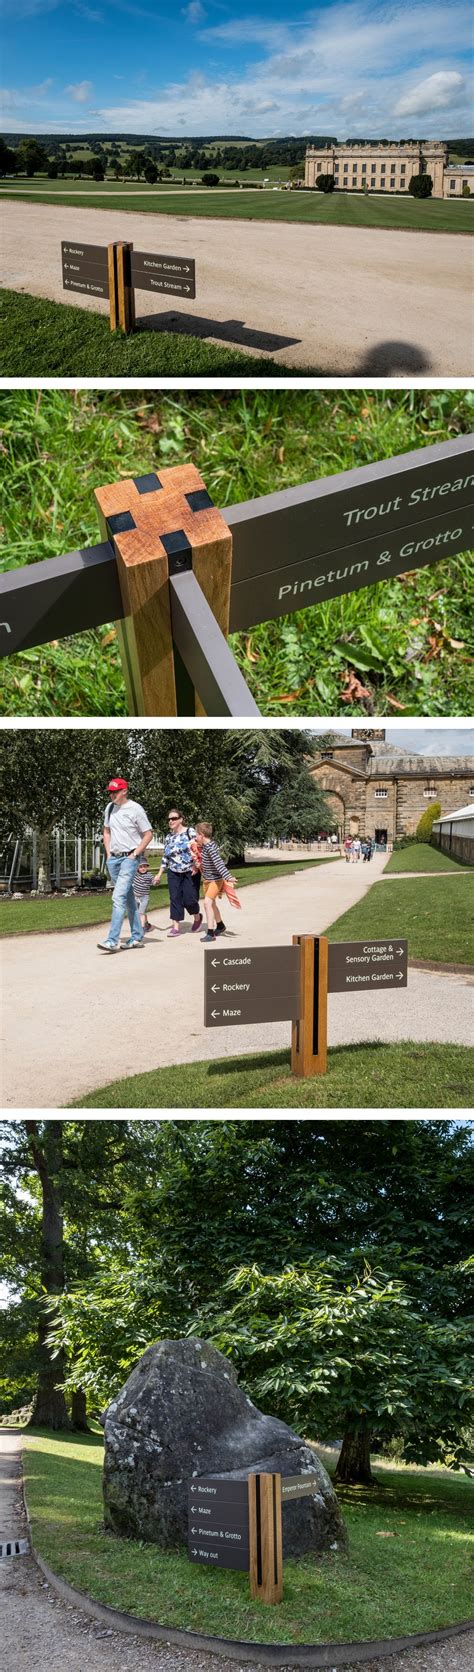 Chatsworth House signage detailed images, wayfinding signage design by ...